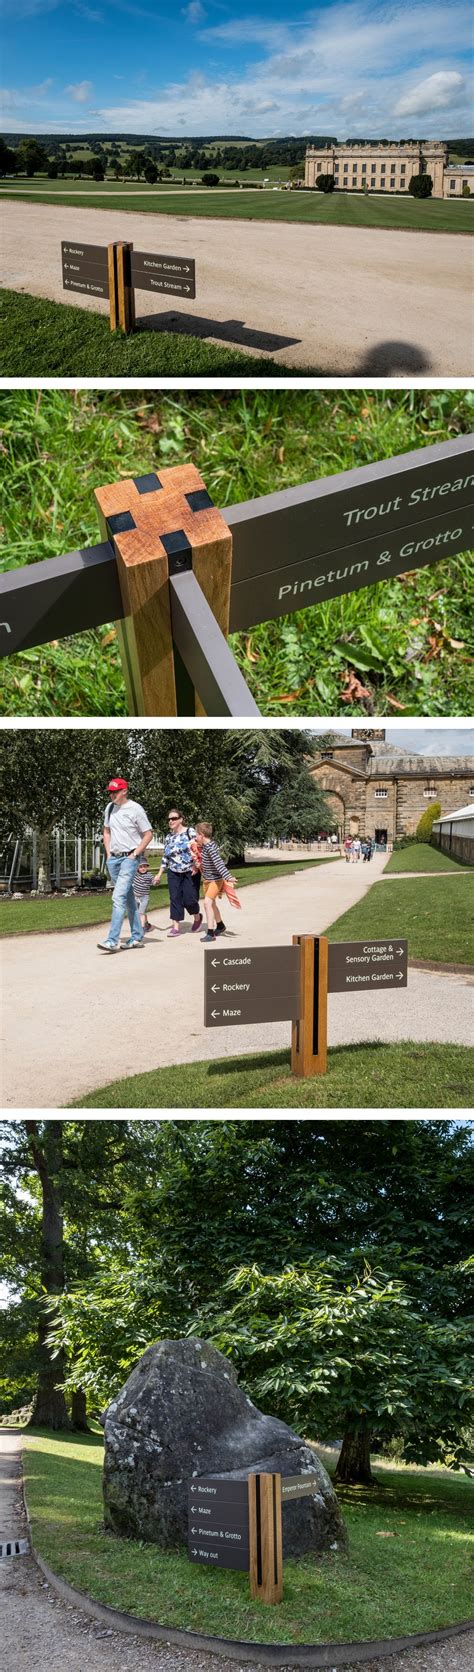 Chatsworth House signage detailed images, wayfinding signage design by ...